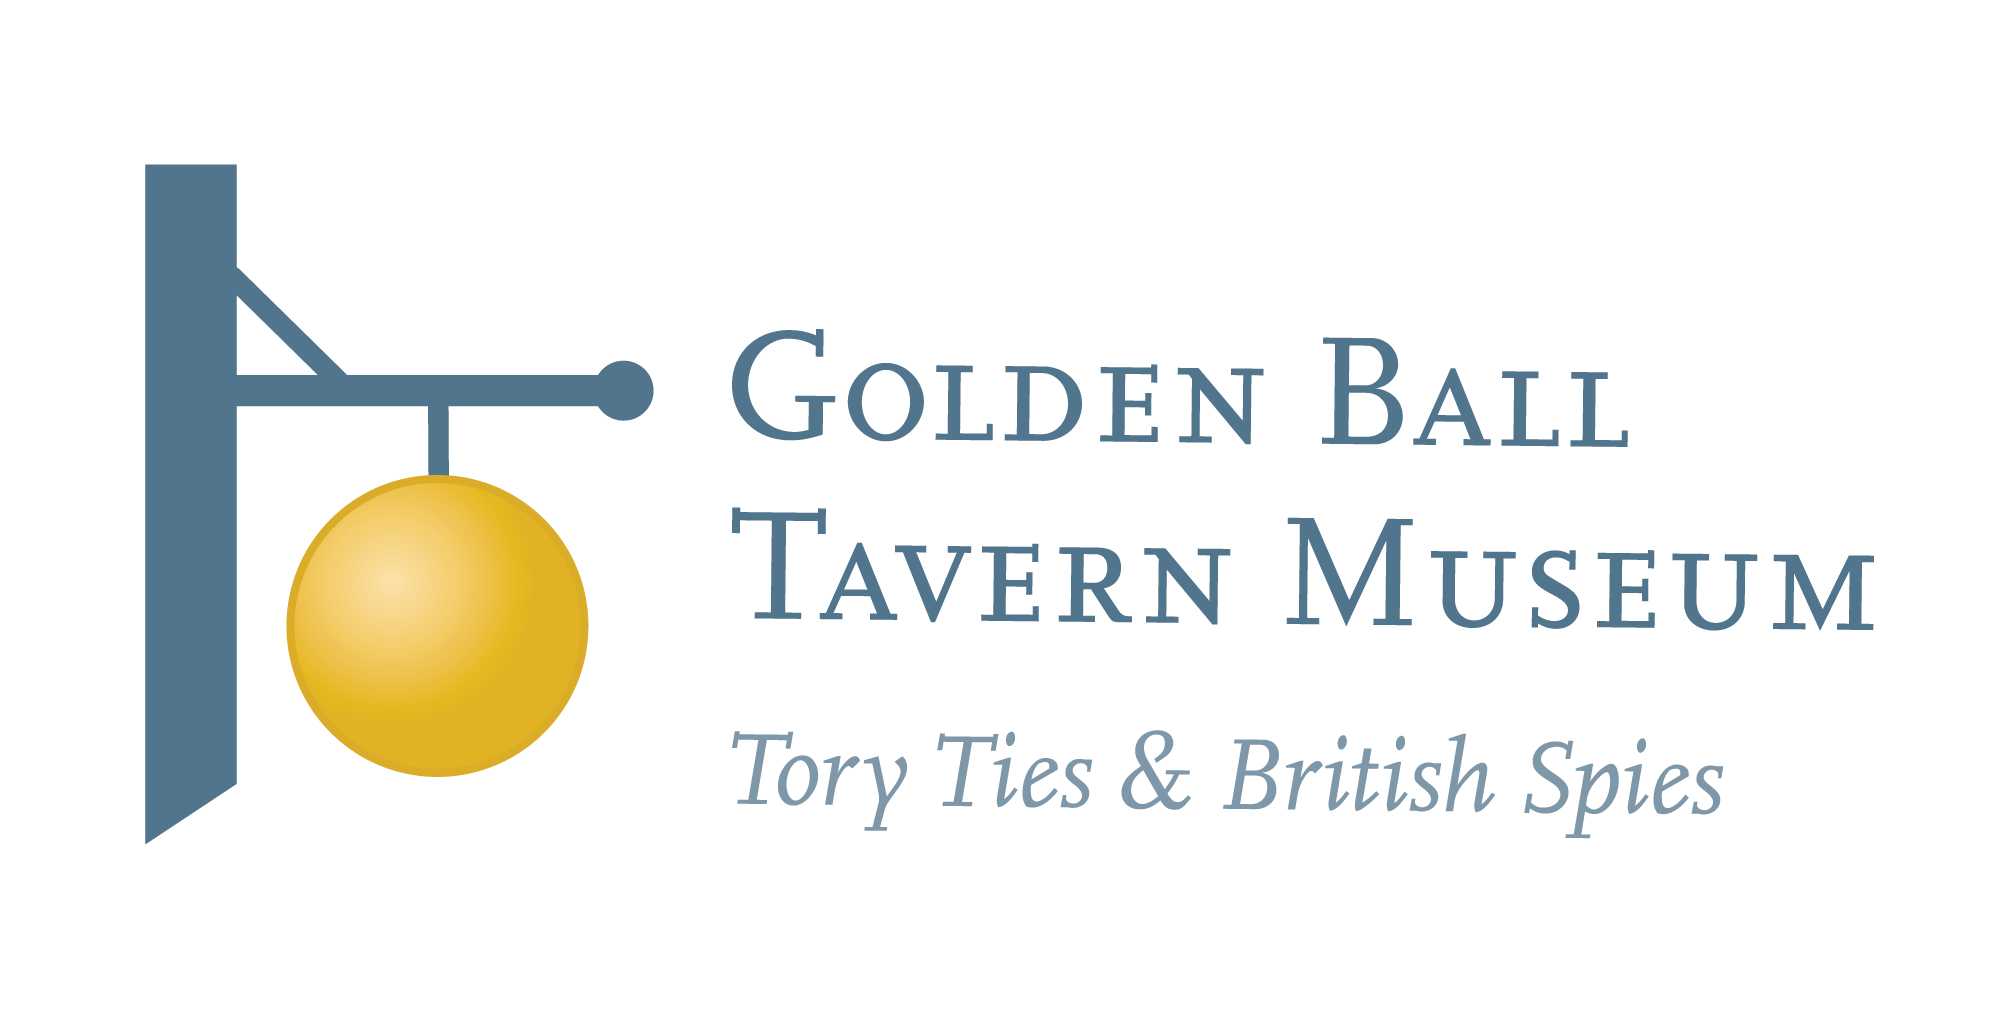 Golden Ball Tavern Museum Logo "Tory Ties & British Spies"